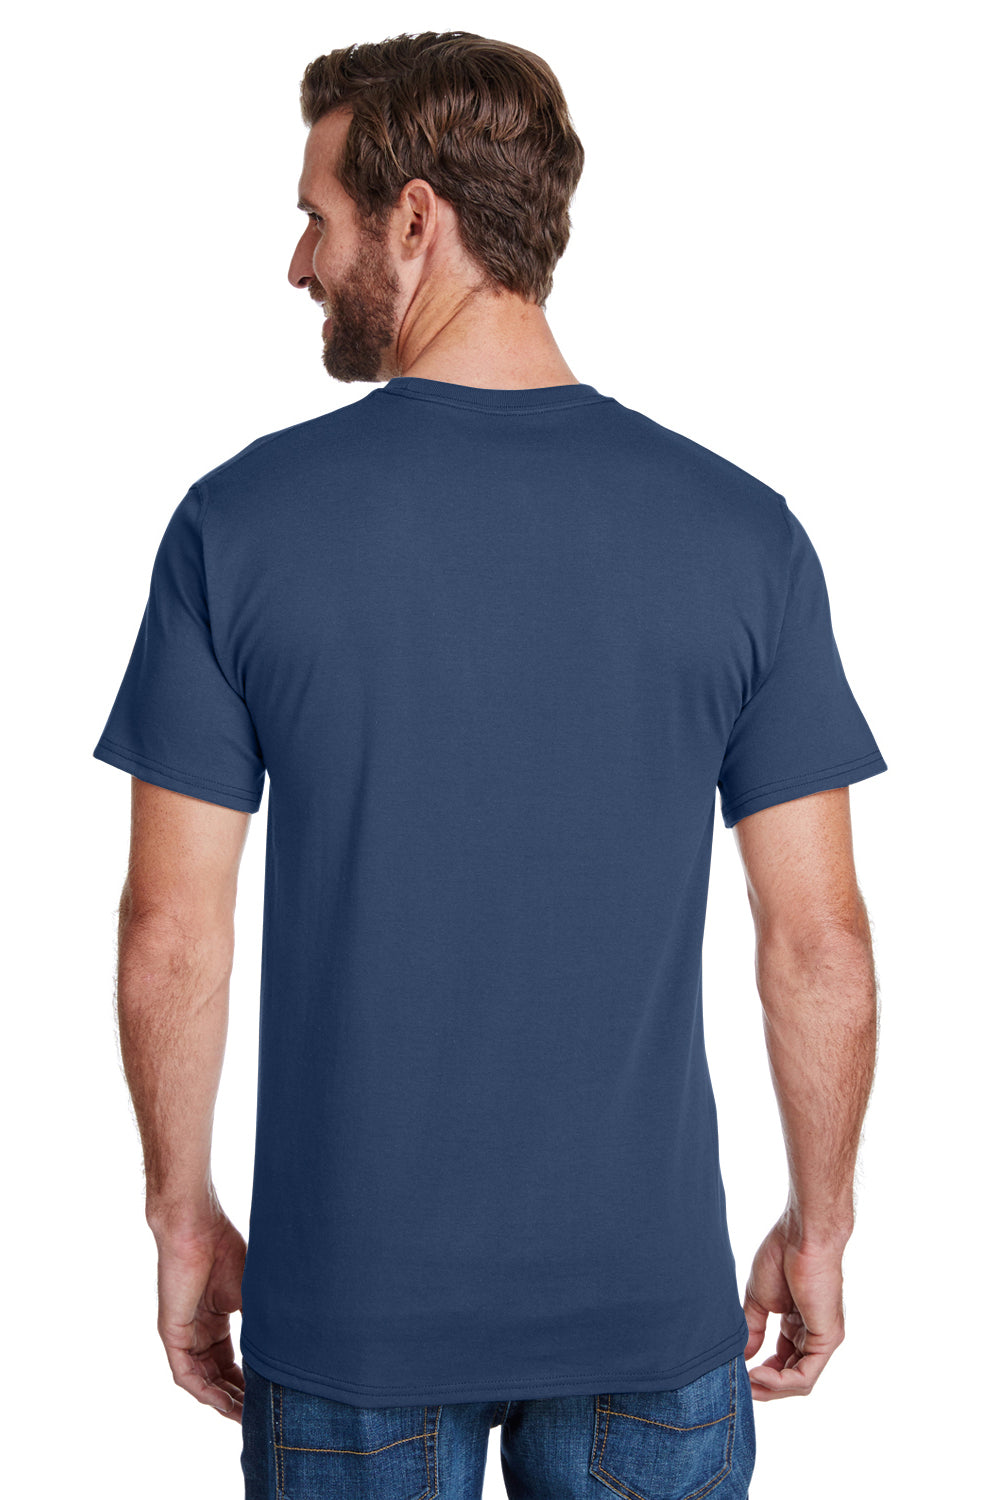 Hanes W110 Mens Workwear Short Sleeve Crewneck T-Shirt w/ Pocket Navy Blue Back